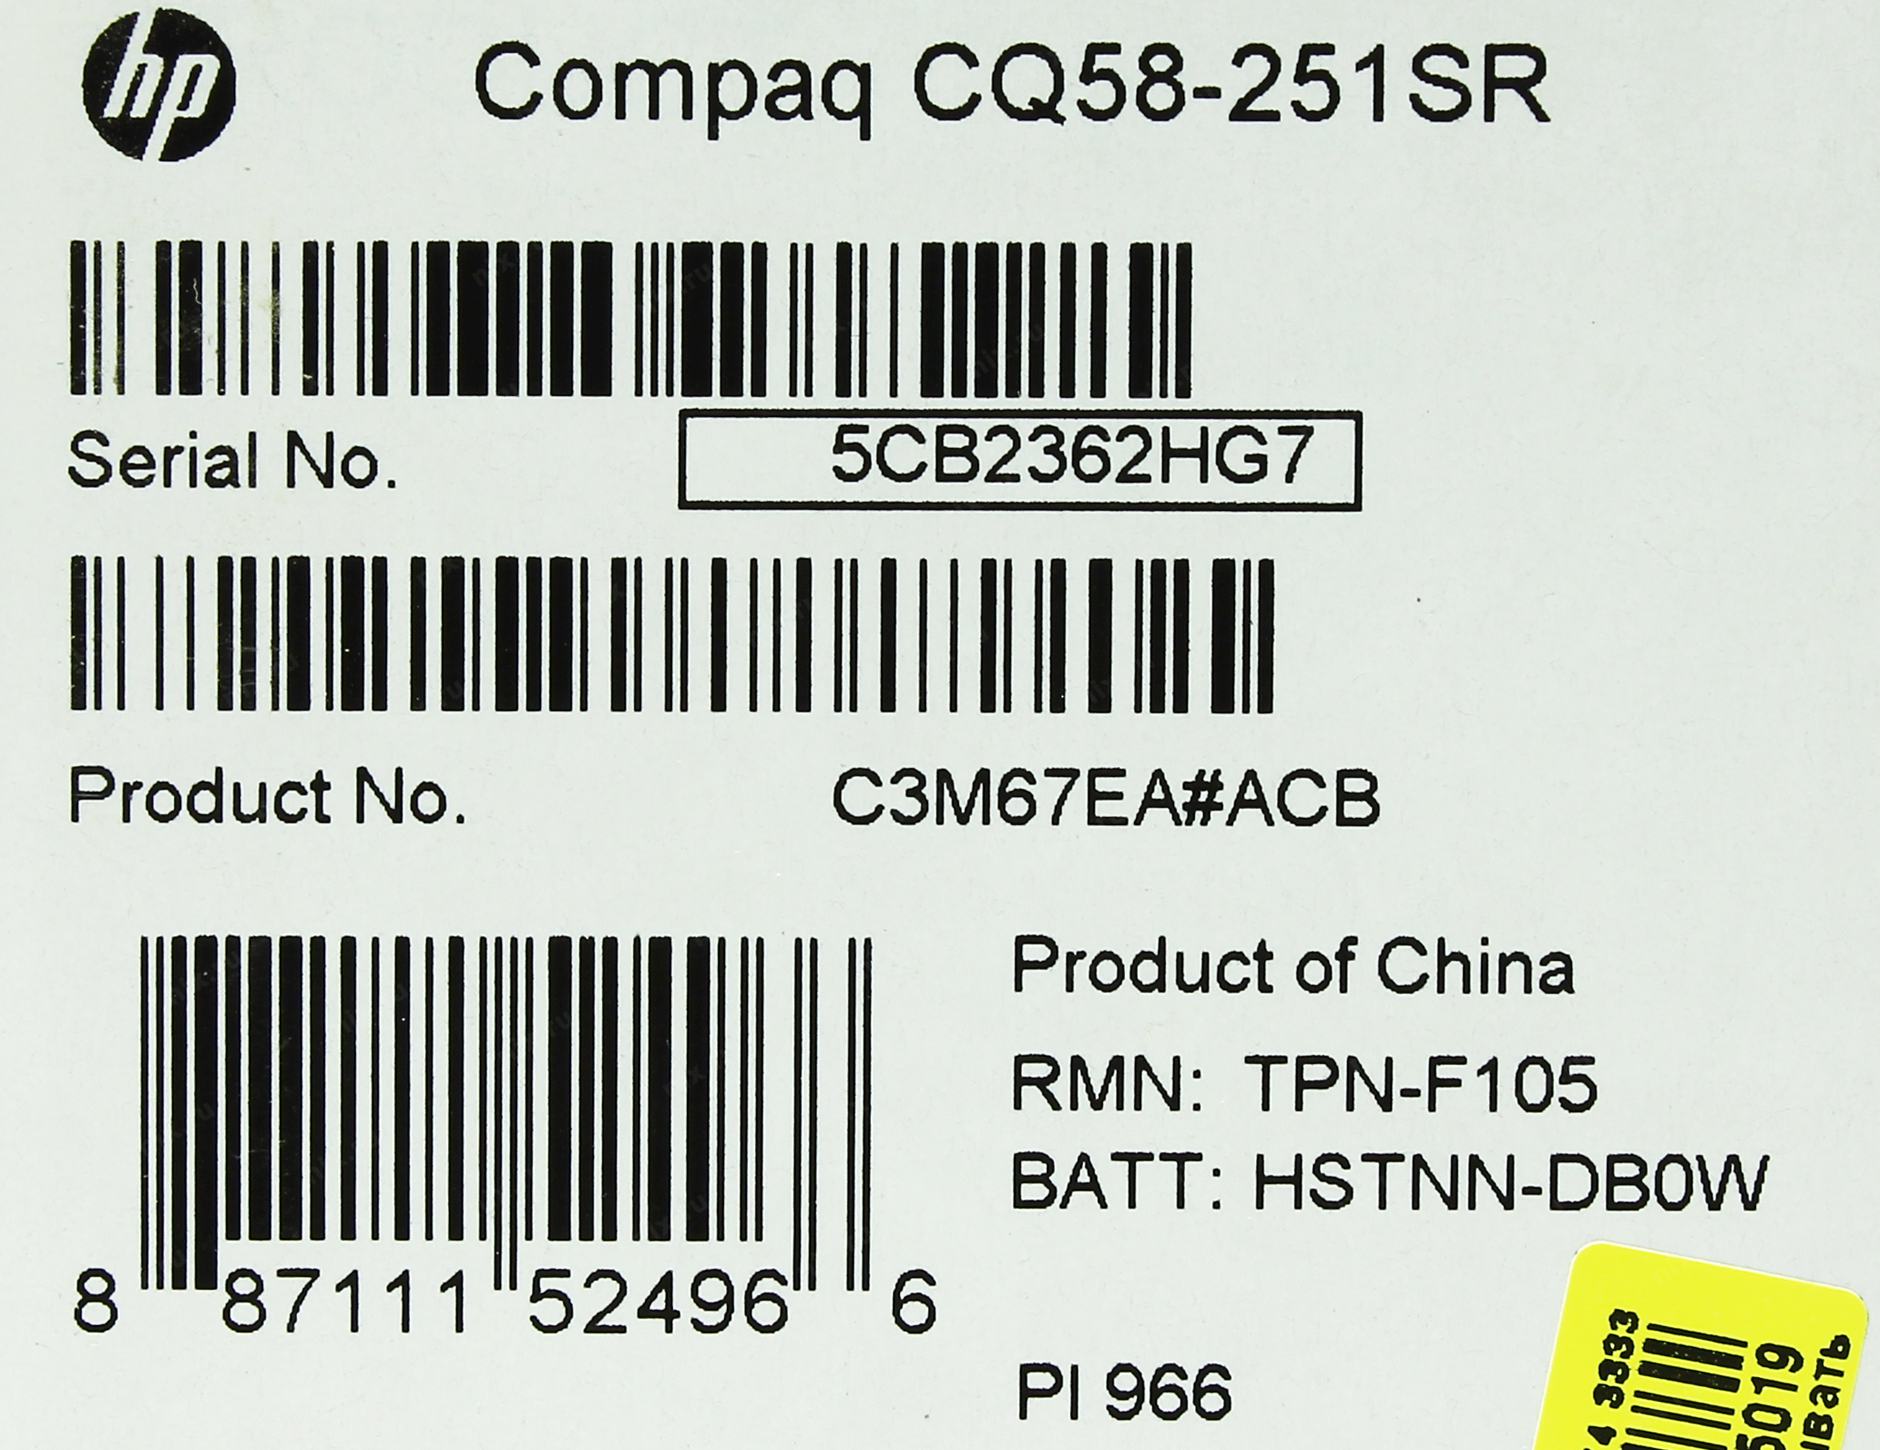 Ноутбук Hp Compaq Presario Cq58-D28er Black Licorice (E6z33ea/E4q58ea)